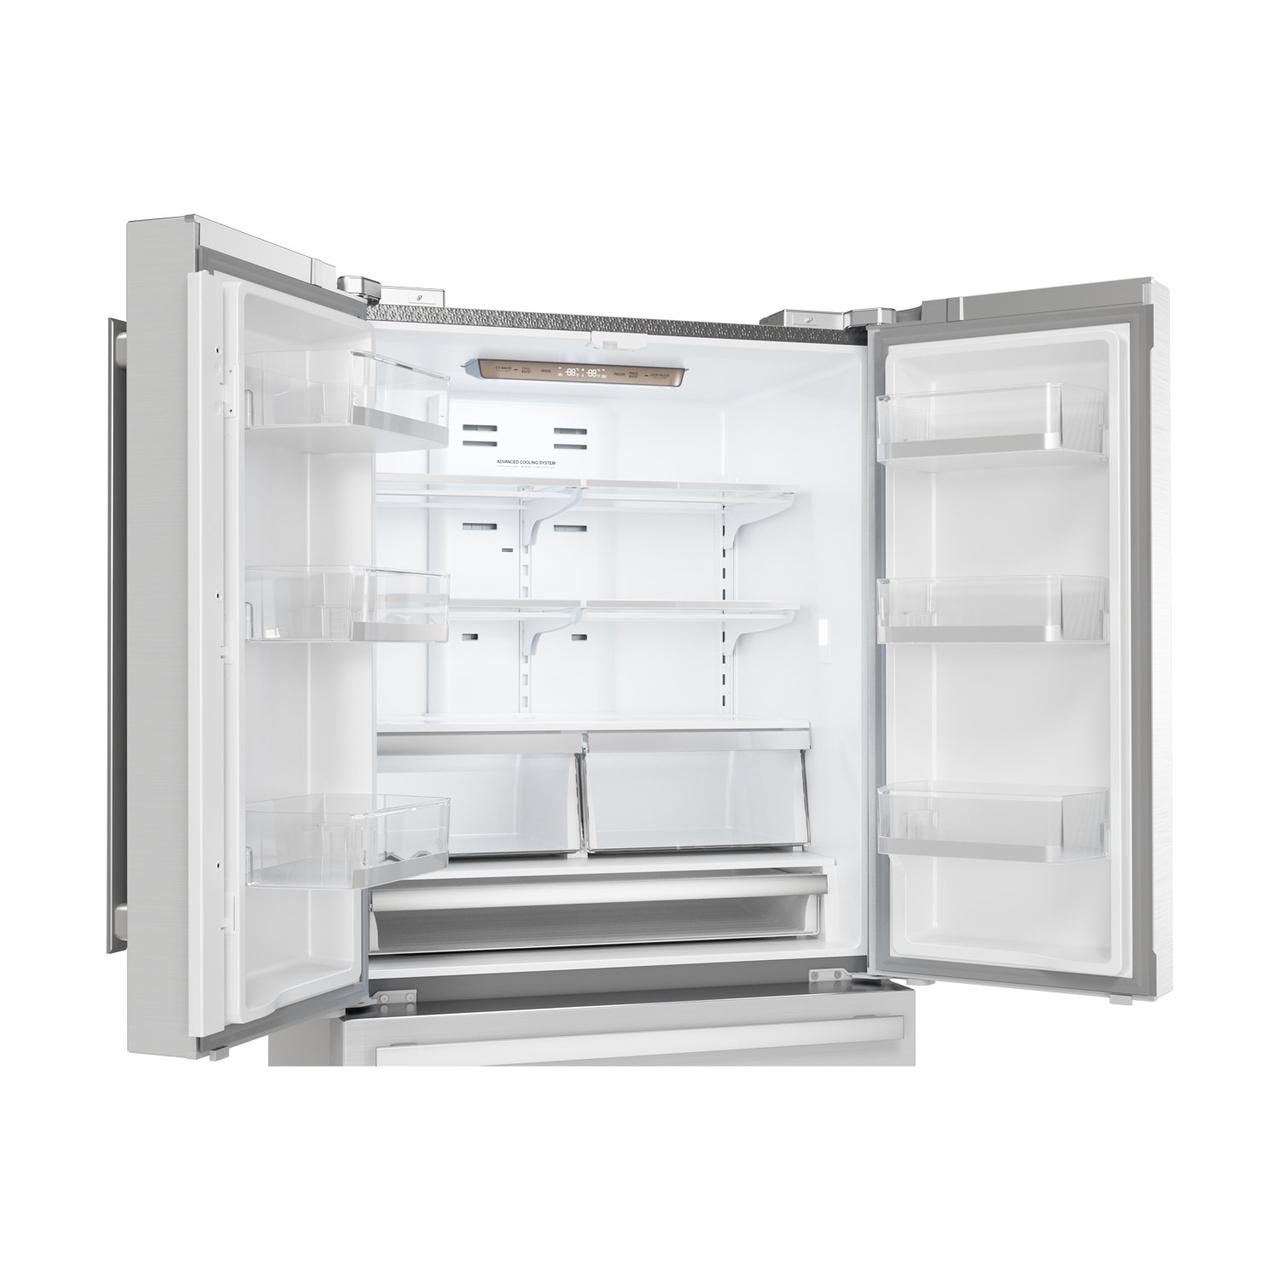 Sharp French 4-Door Counter-Depth Refrigerator